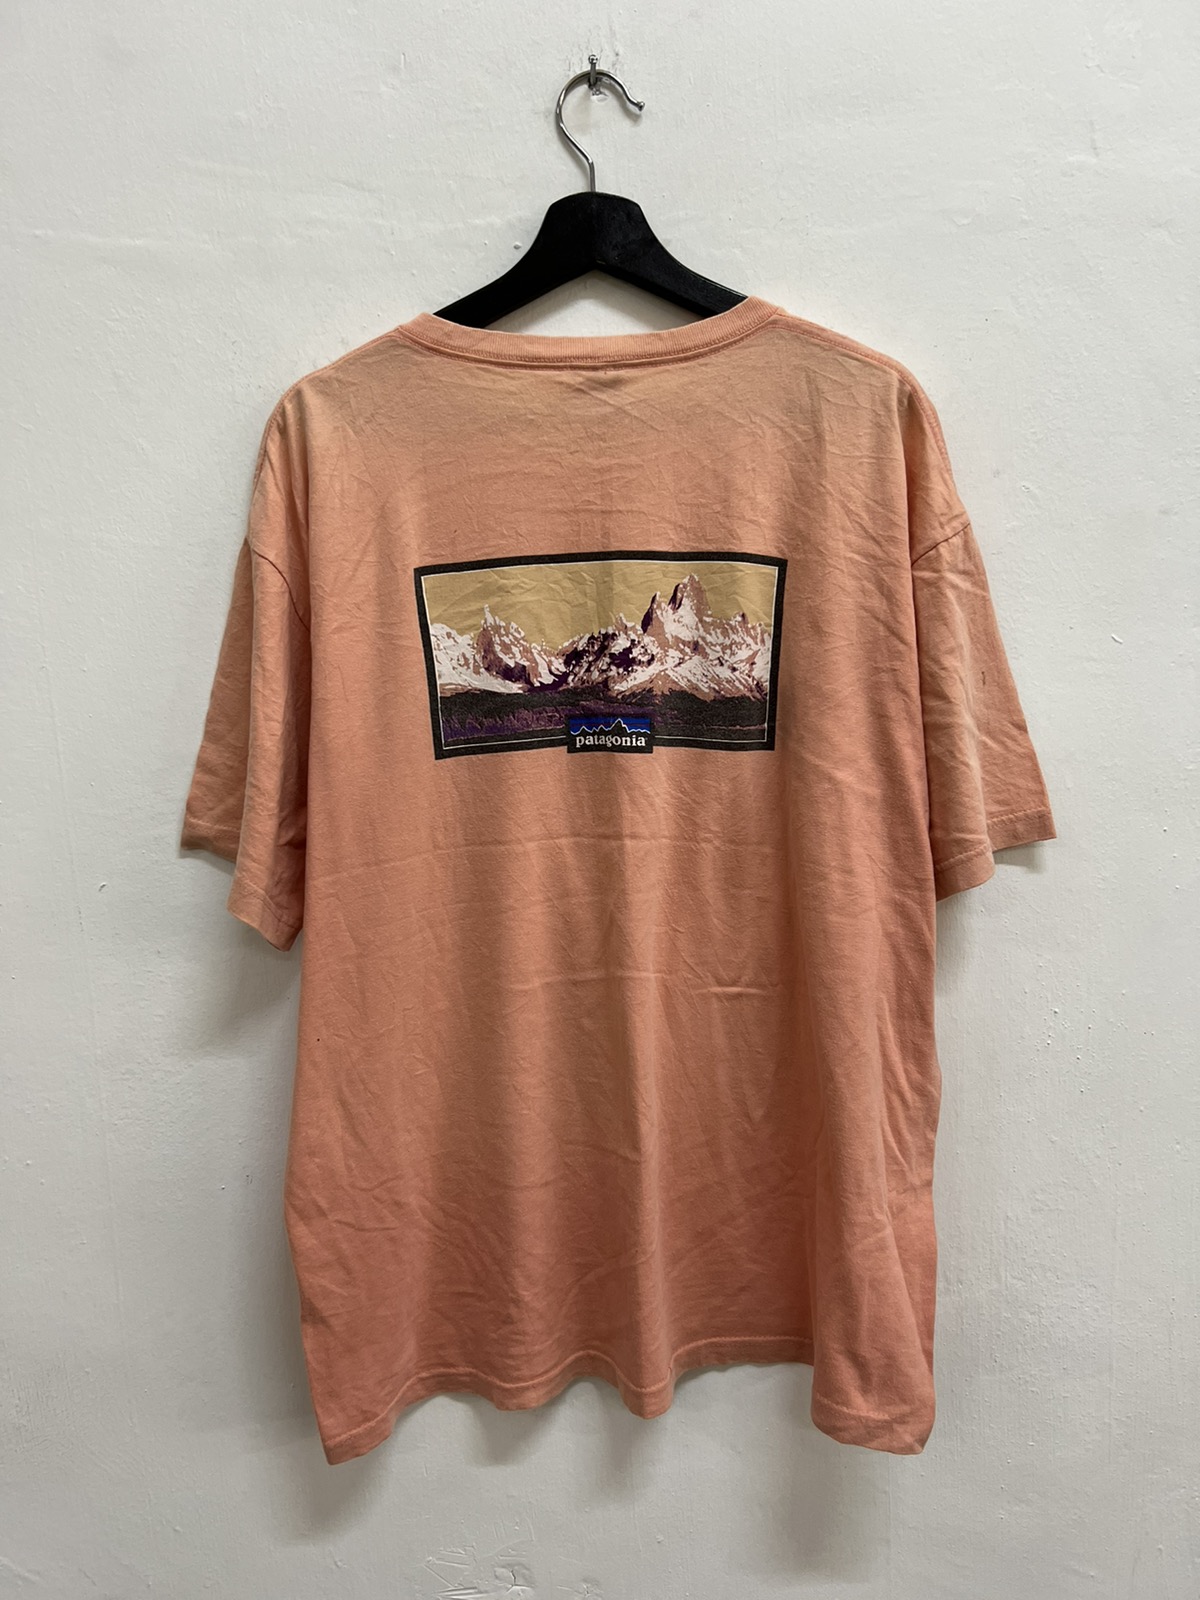 🔥STEAL🔥 Patagonia Tee Shirt - 4